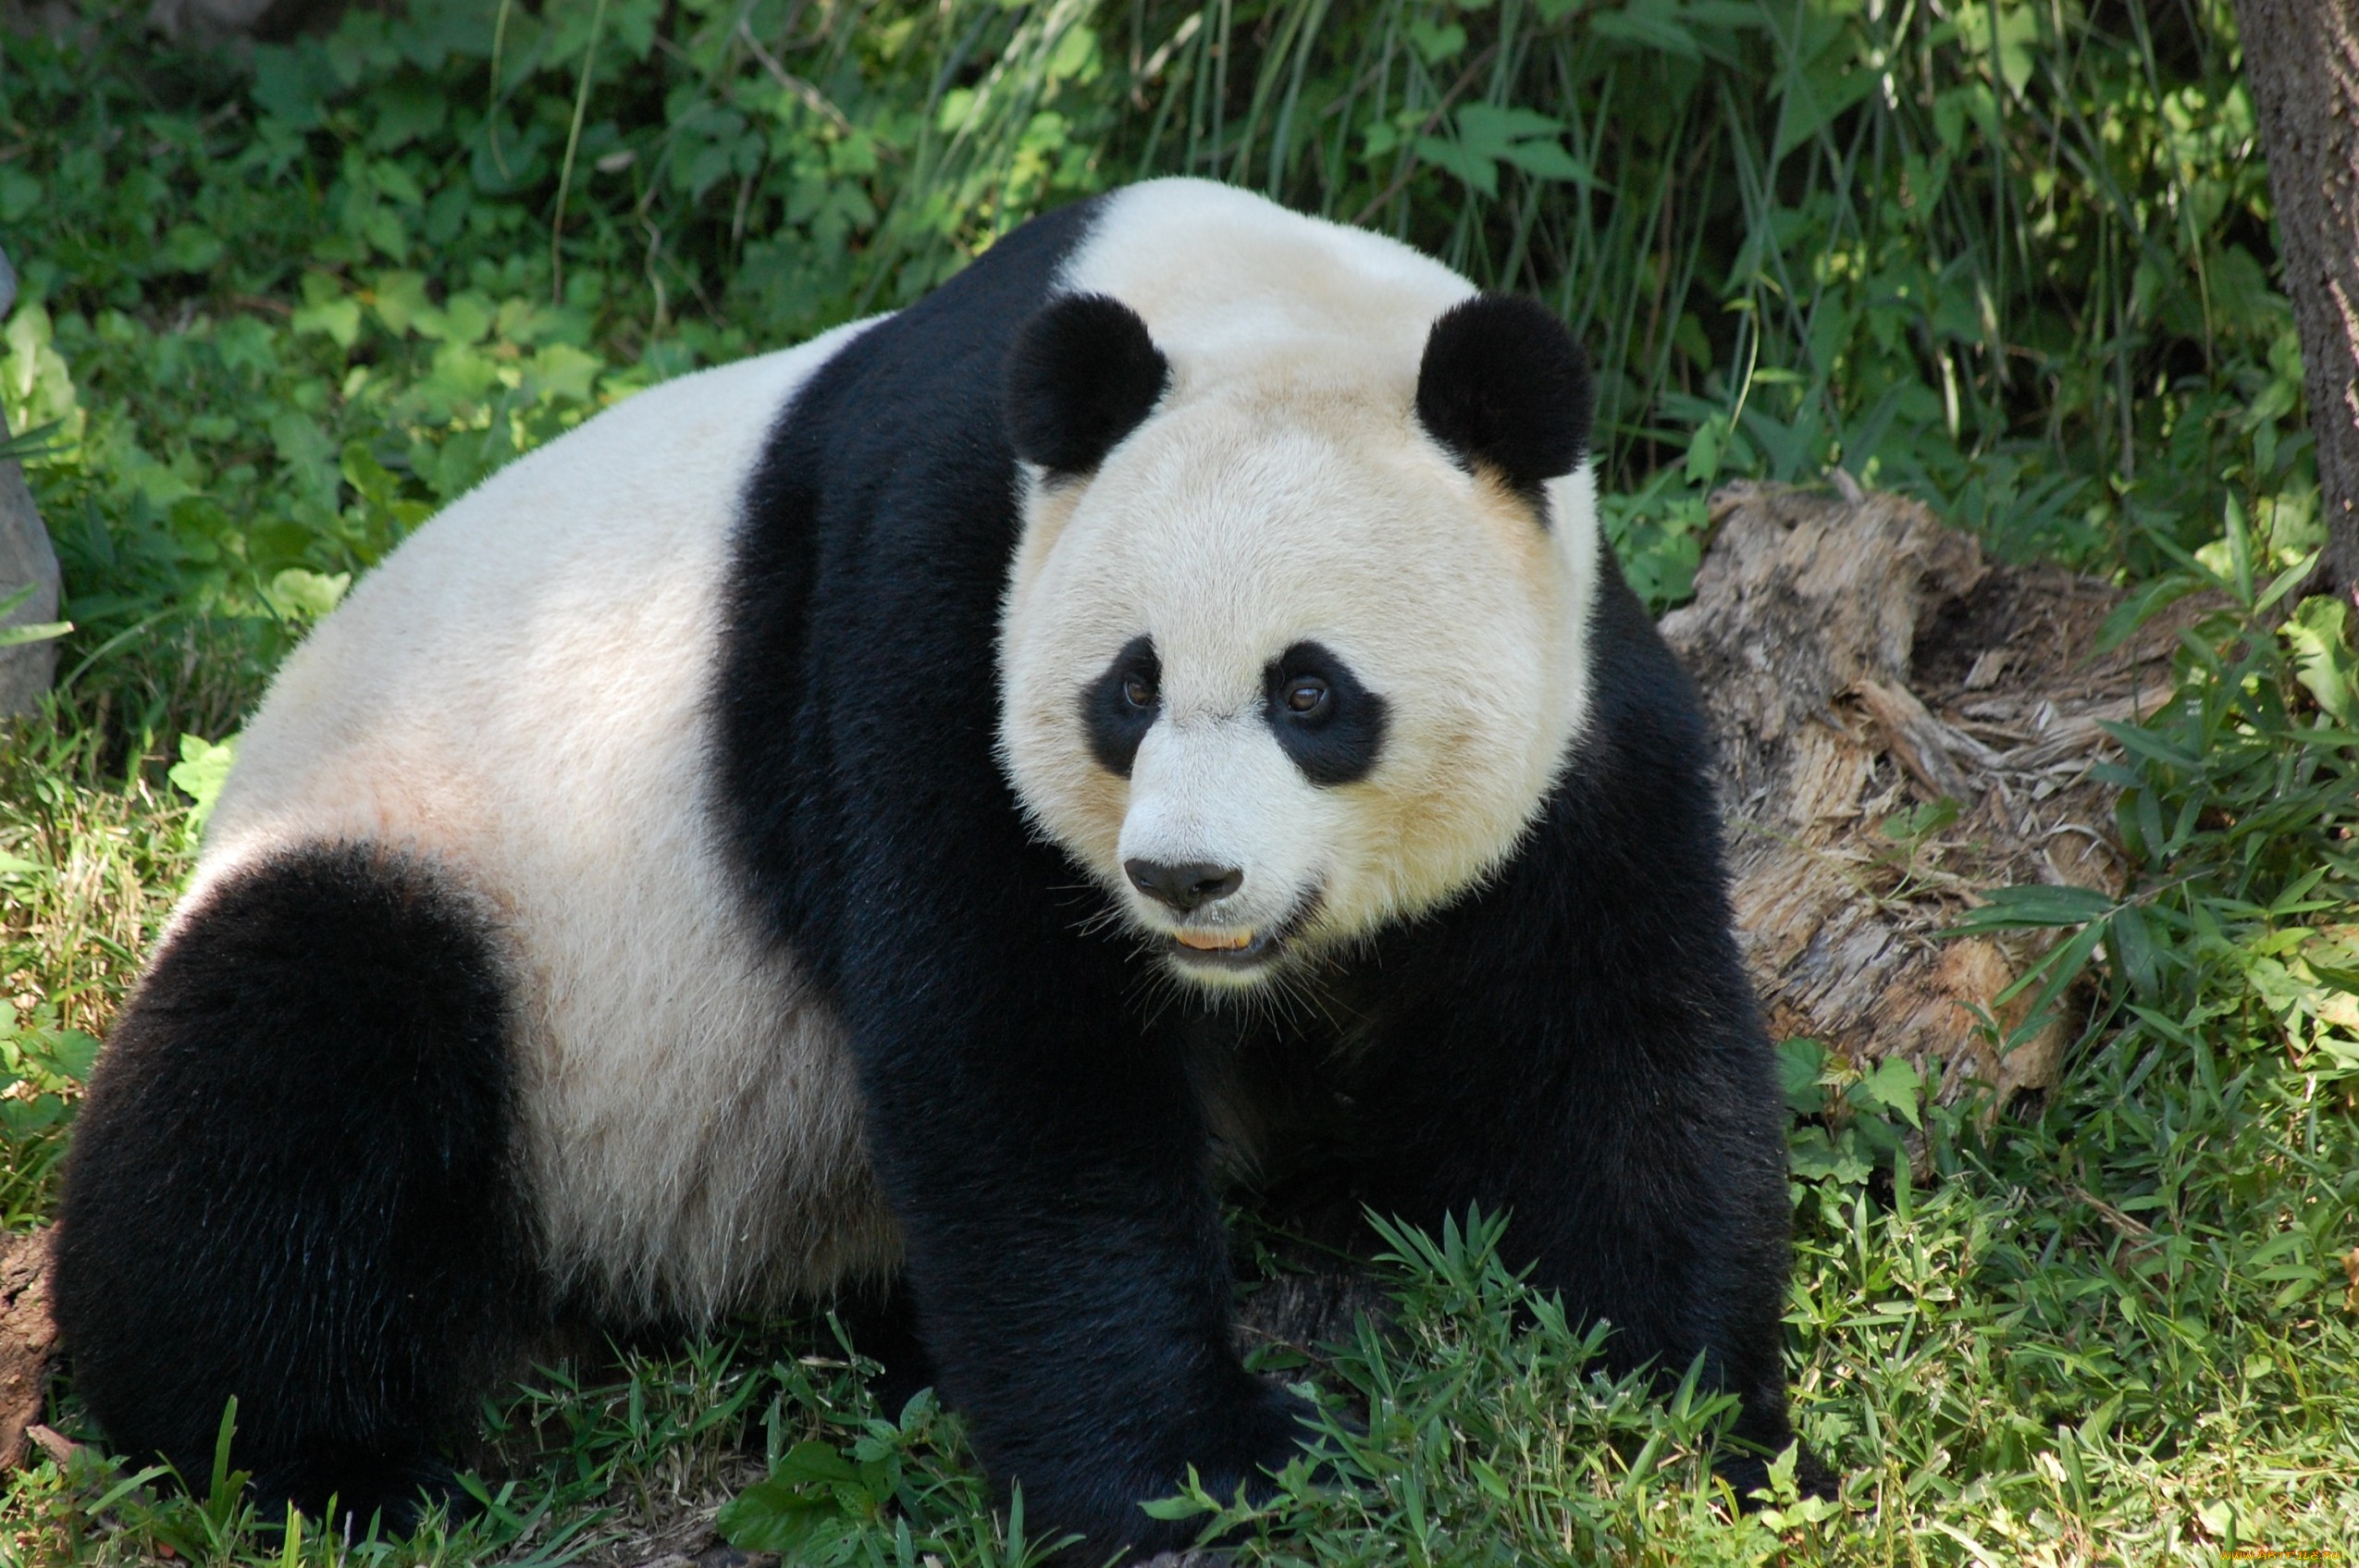  Panda  Full  HD  Wallpaper  and Background Image 2550x1695 